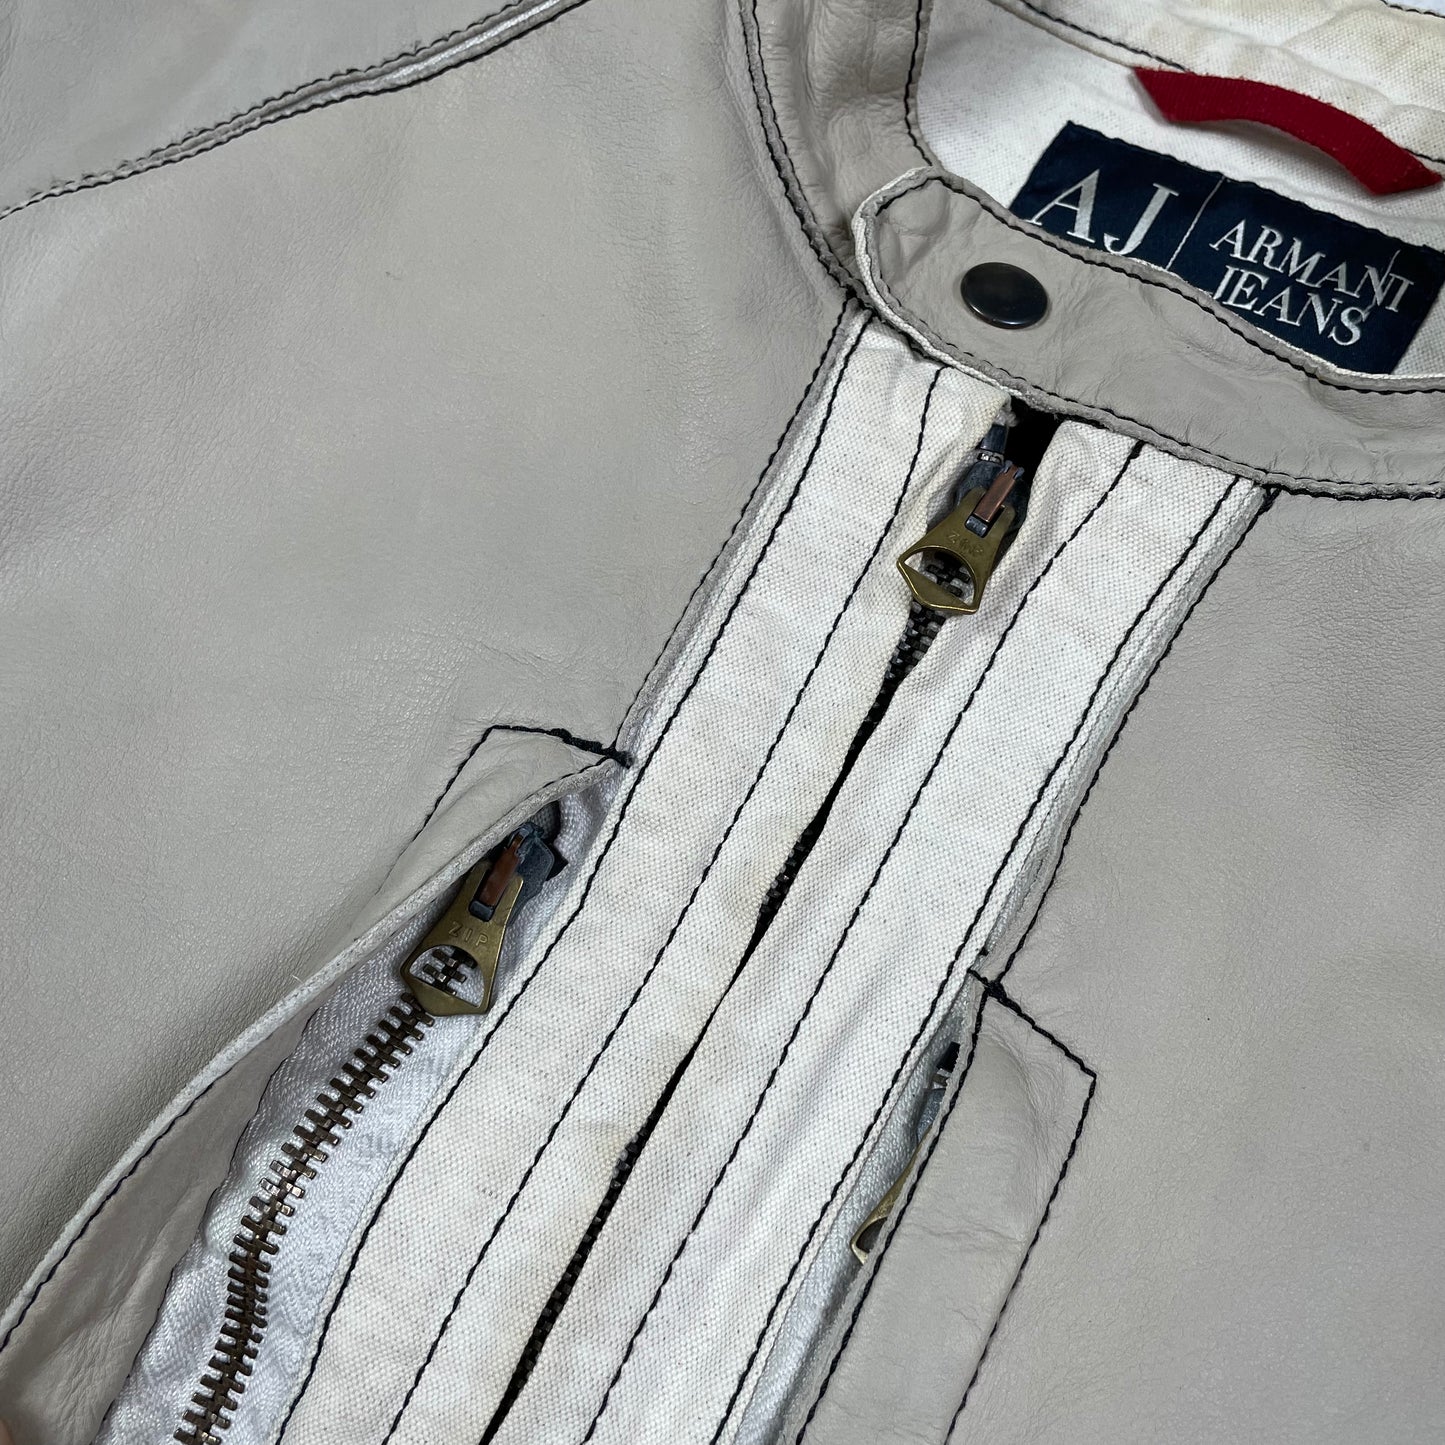 Armani Jeans Leather Linen Jacket Beige